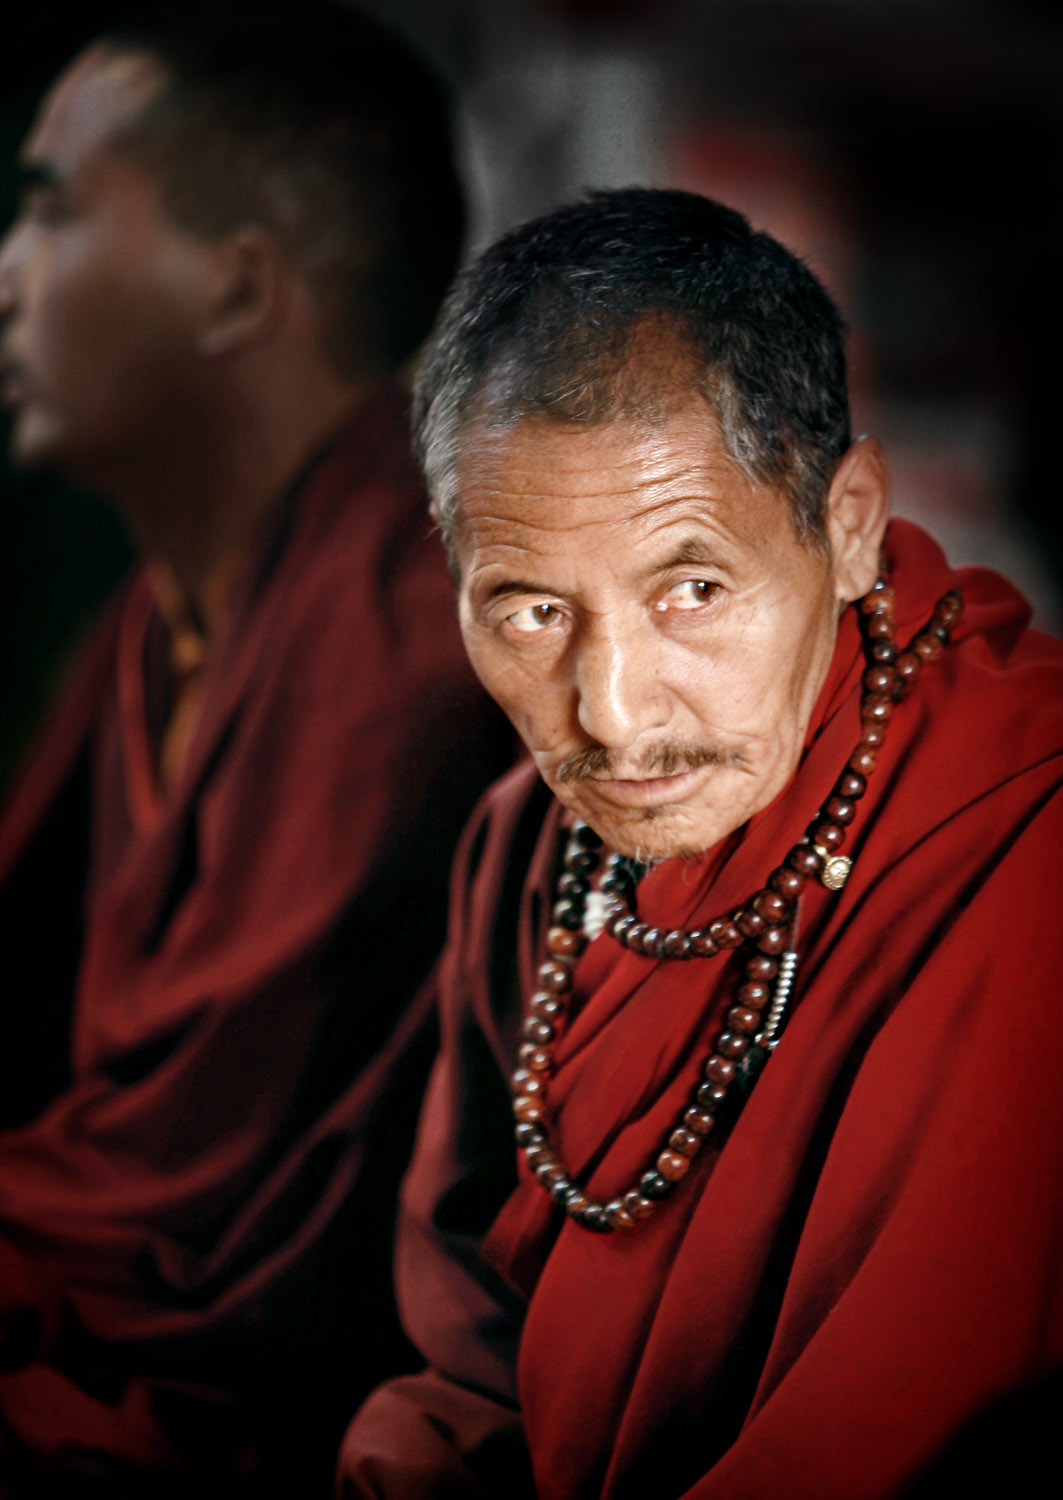 Monk during morning Puja, Hemis Gompa, Ladakh, India